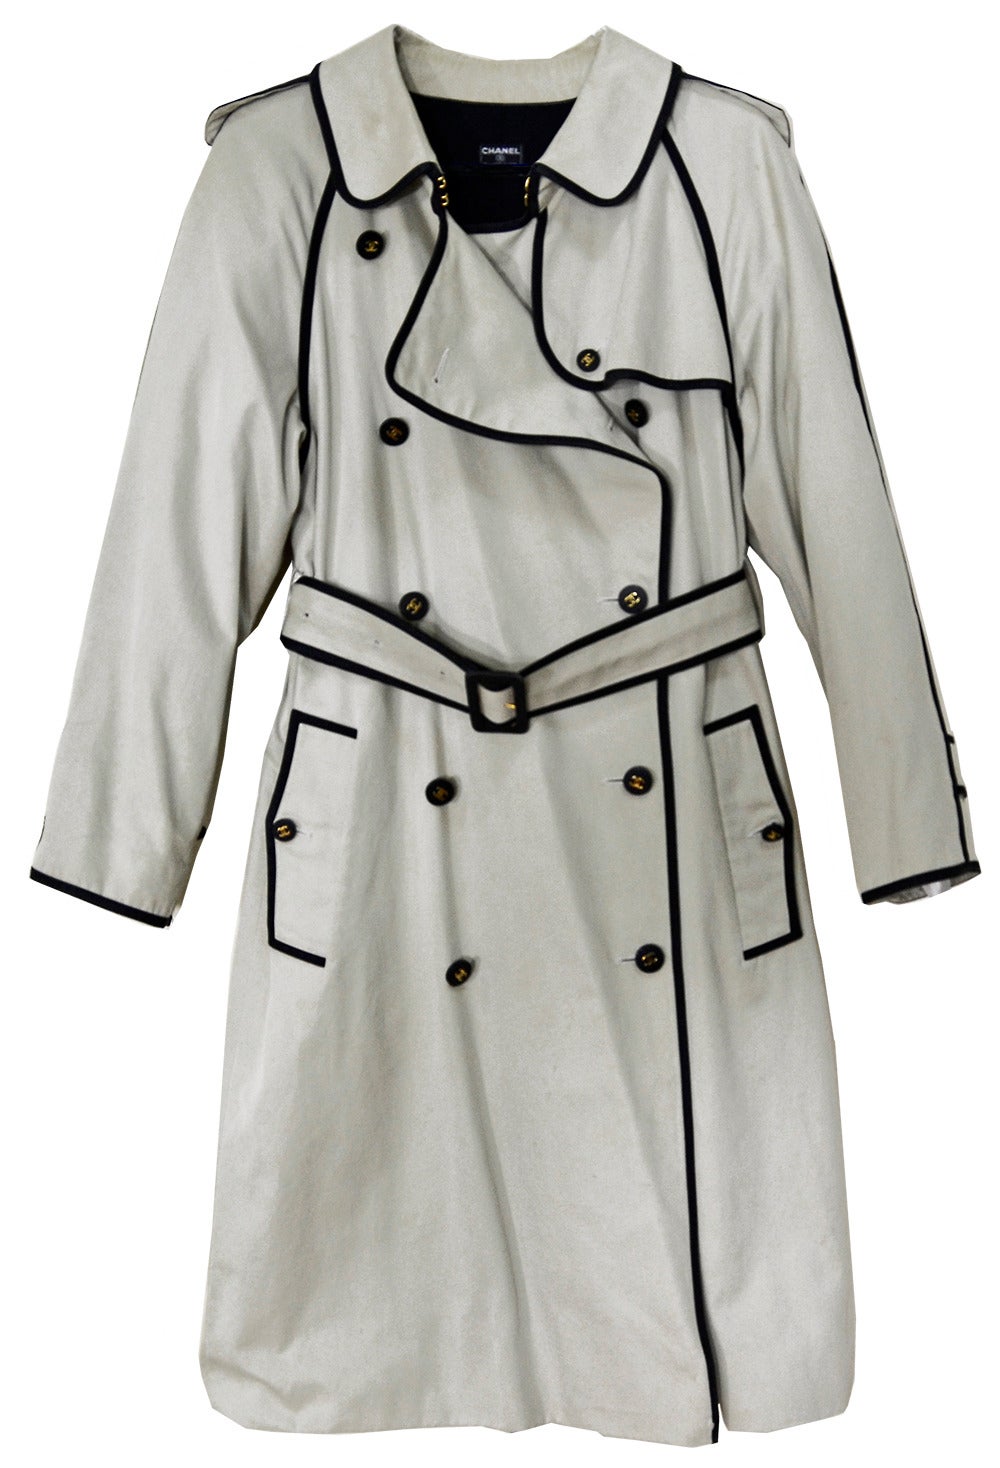 Women's Classic Gorgeous Chanel Raincoat